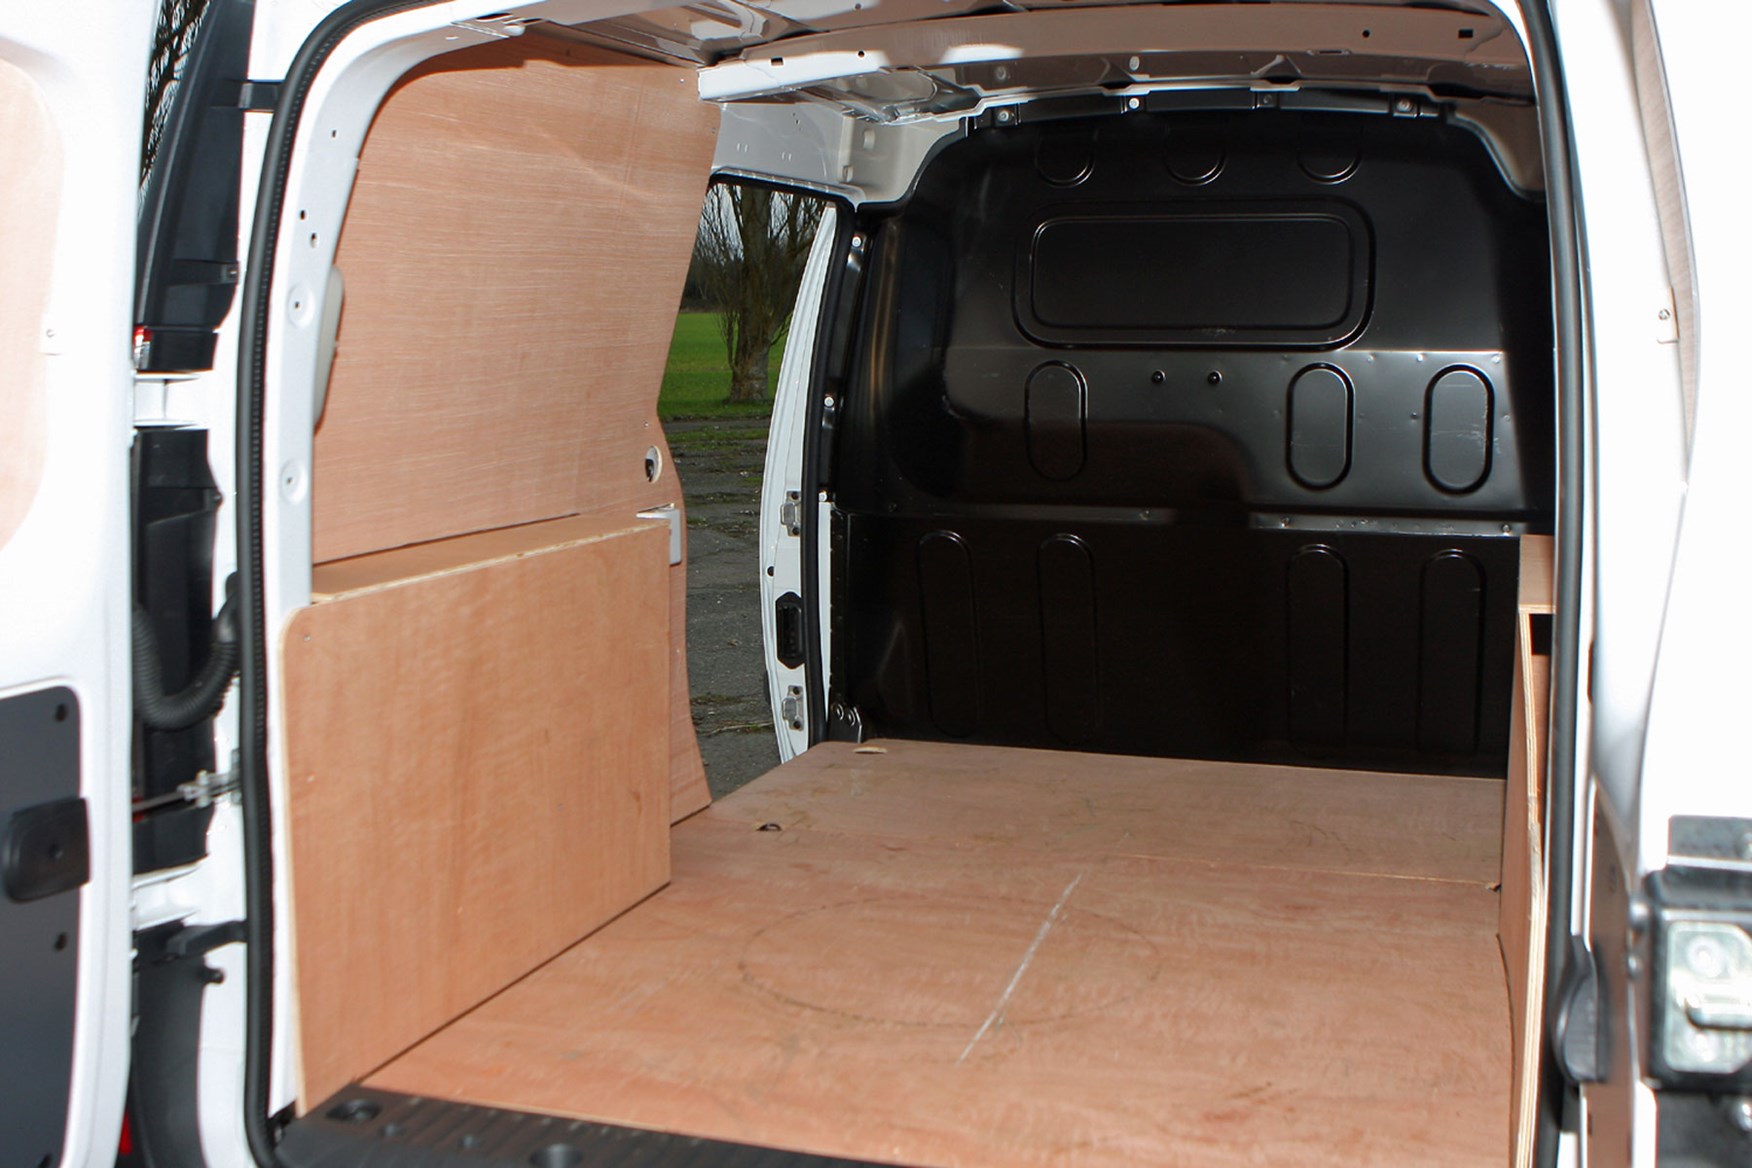 Renault Kangoo van review: a stylish, safe and spacious small van